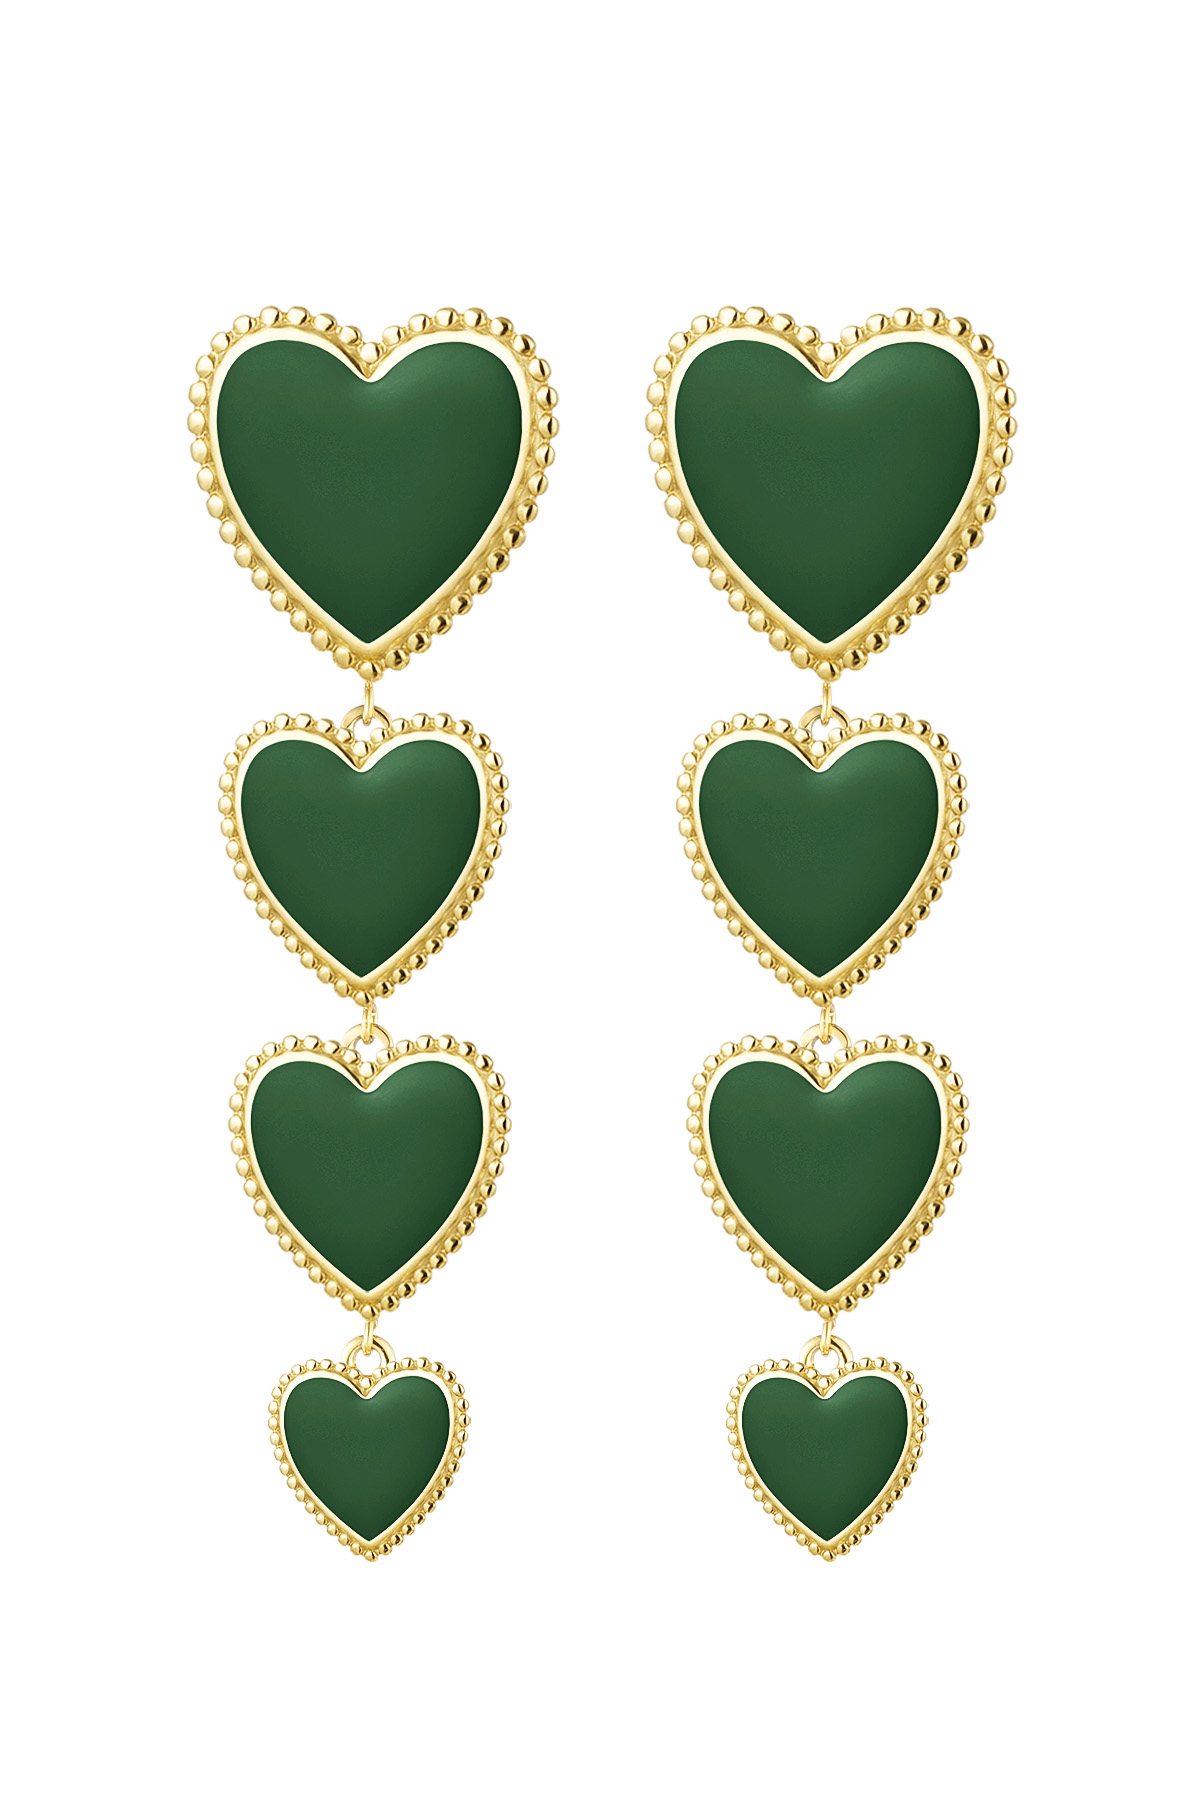 Earrings 4 hearts in a row - green h5 